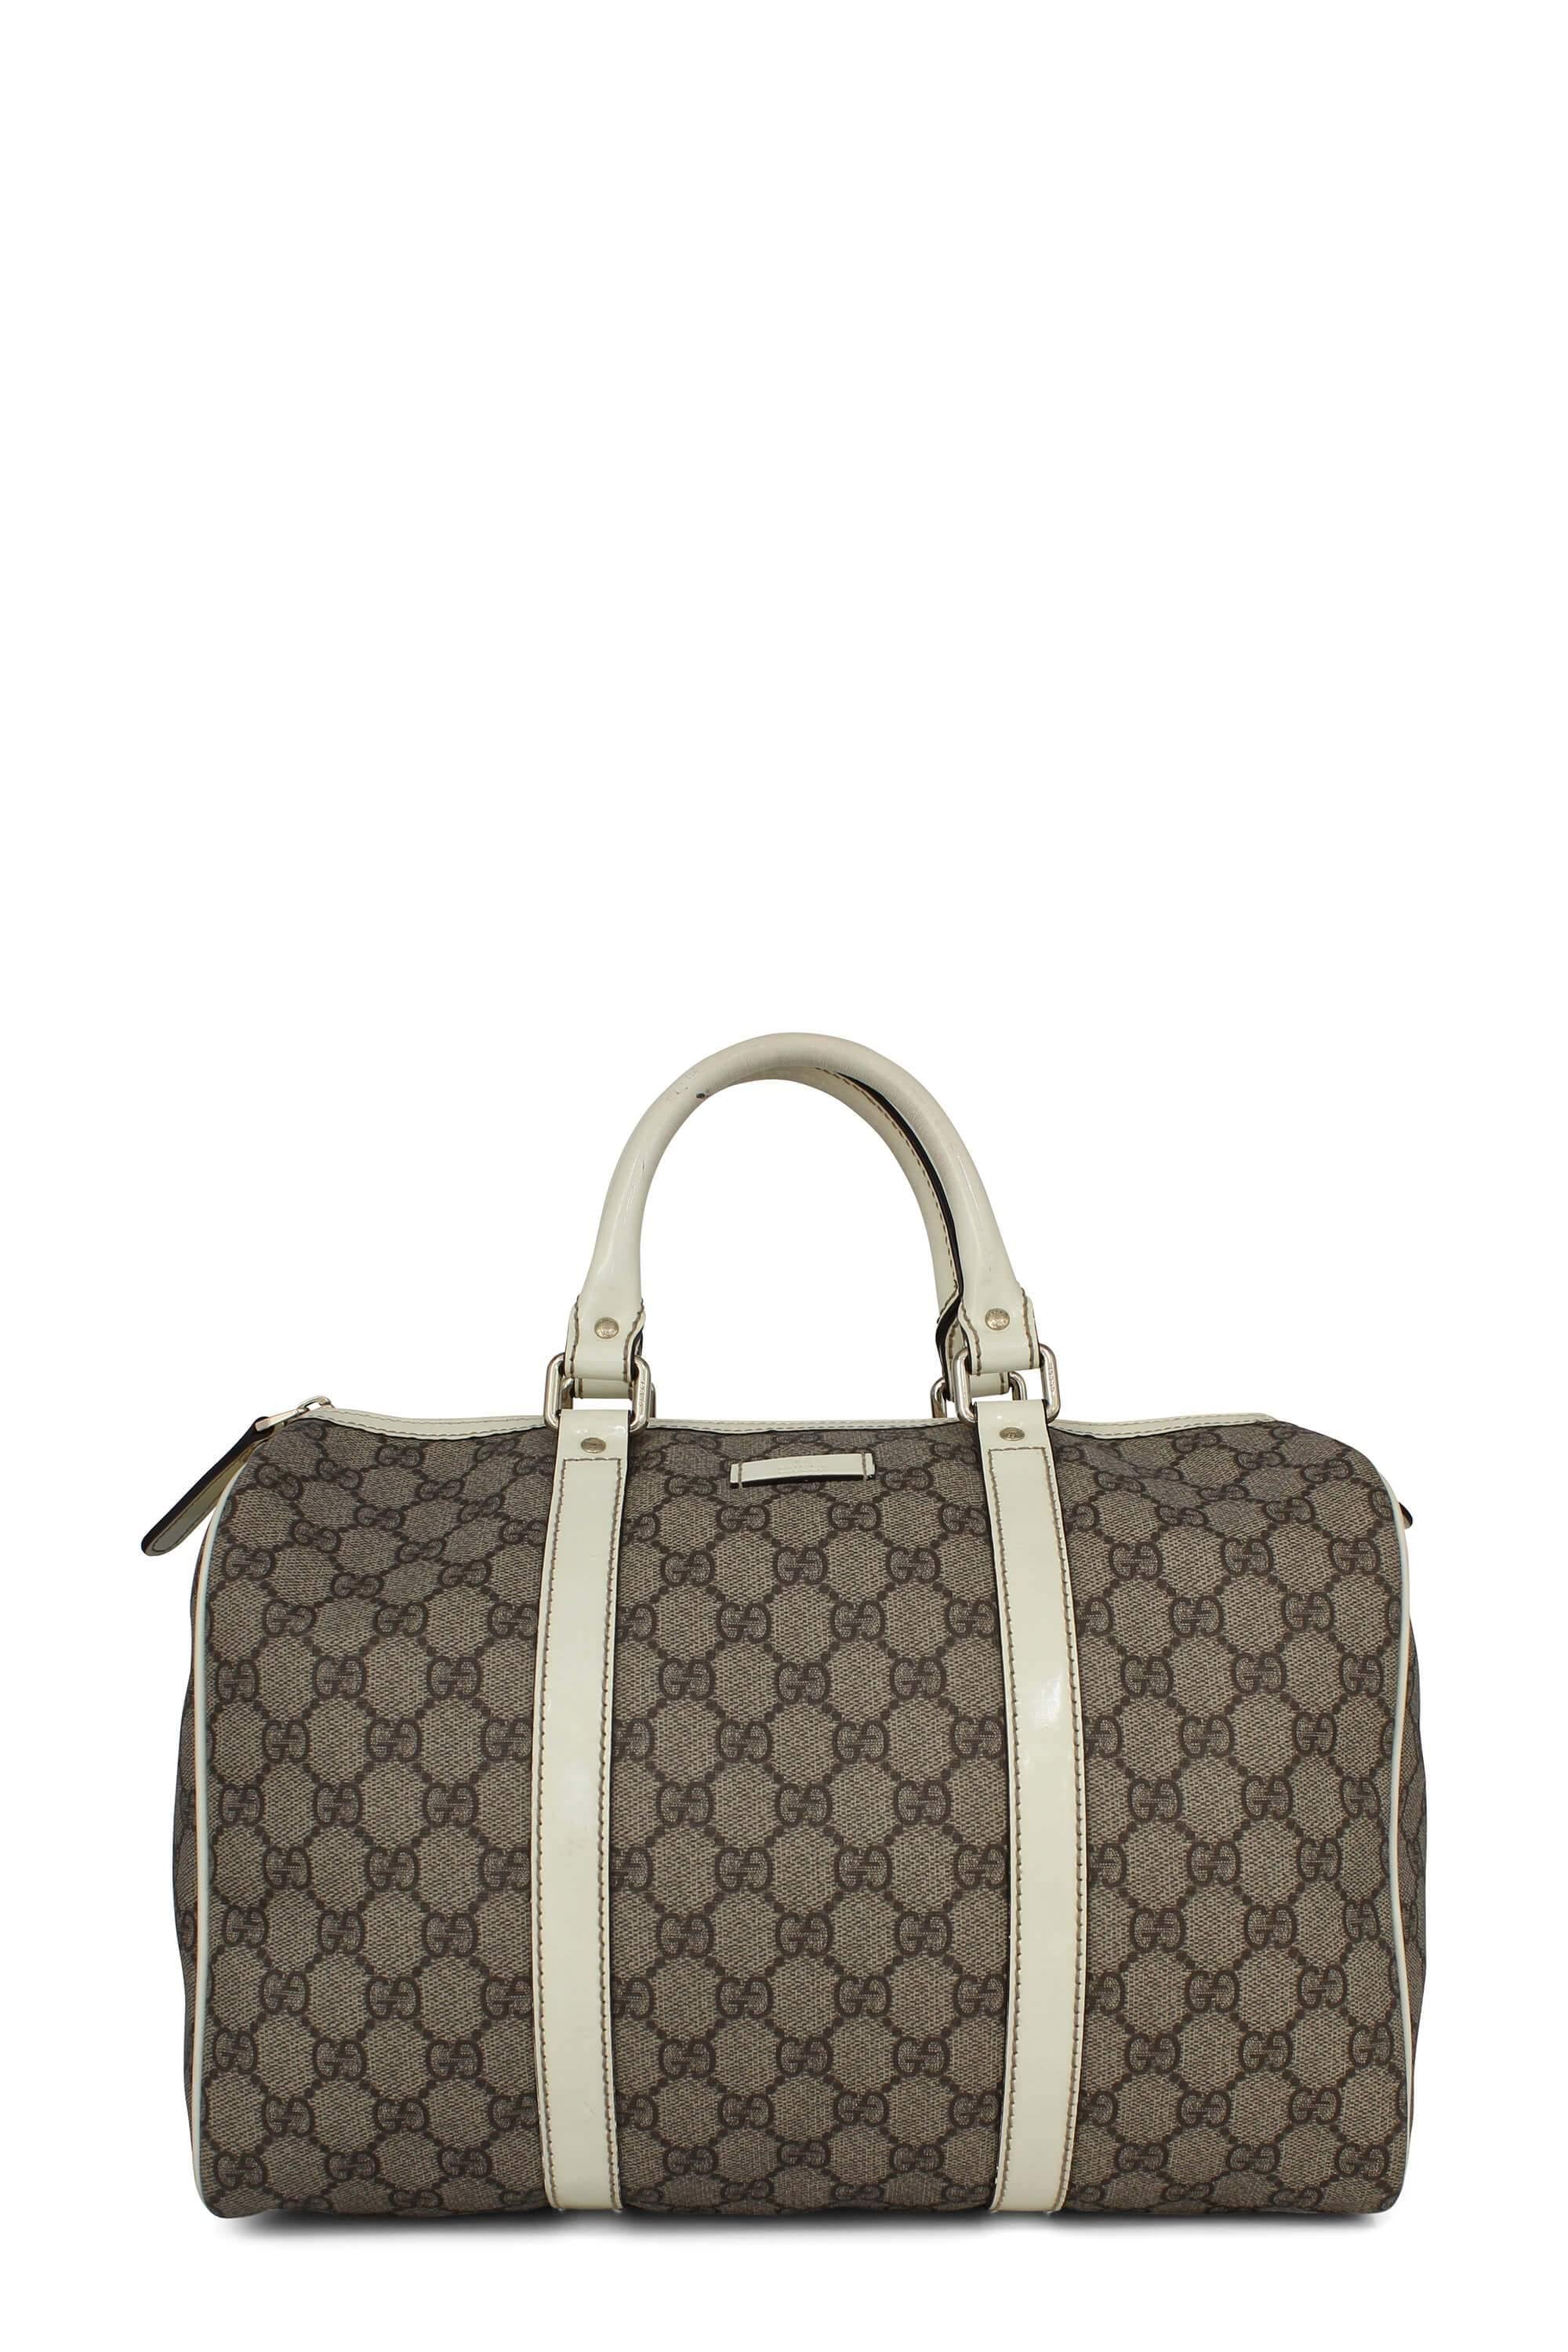 Gucci GG Supreme White Patent Leather Medium Joy Boston Bag